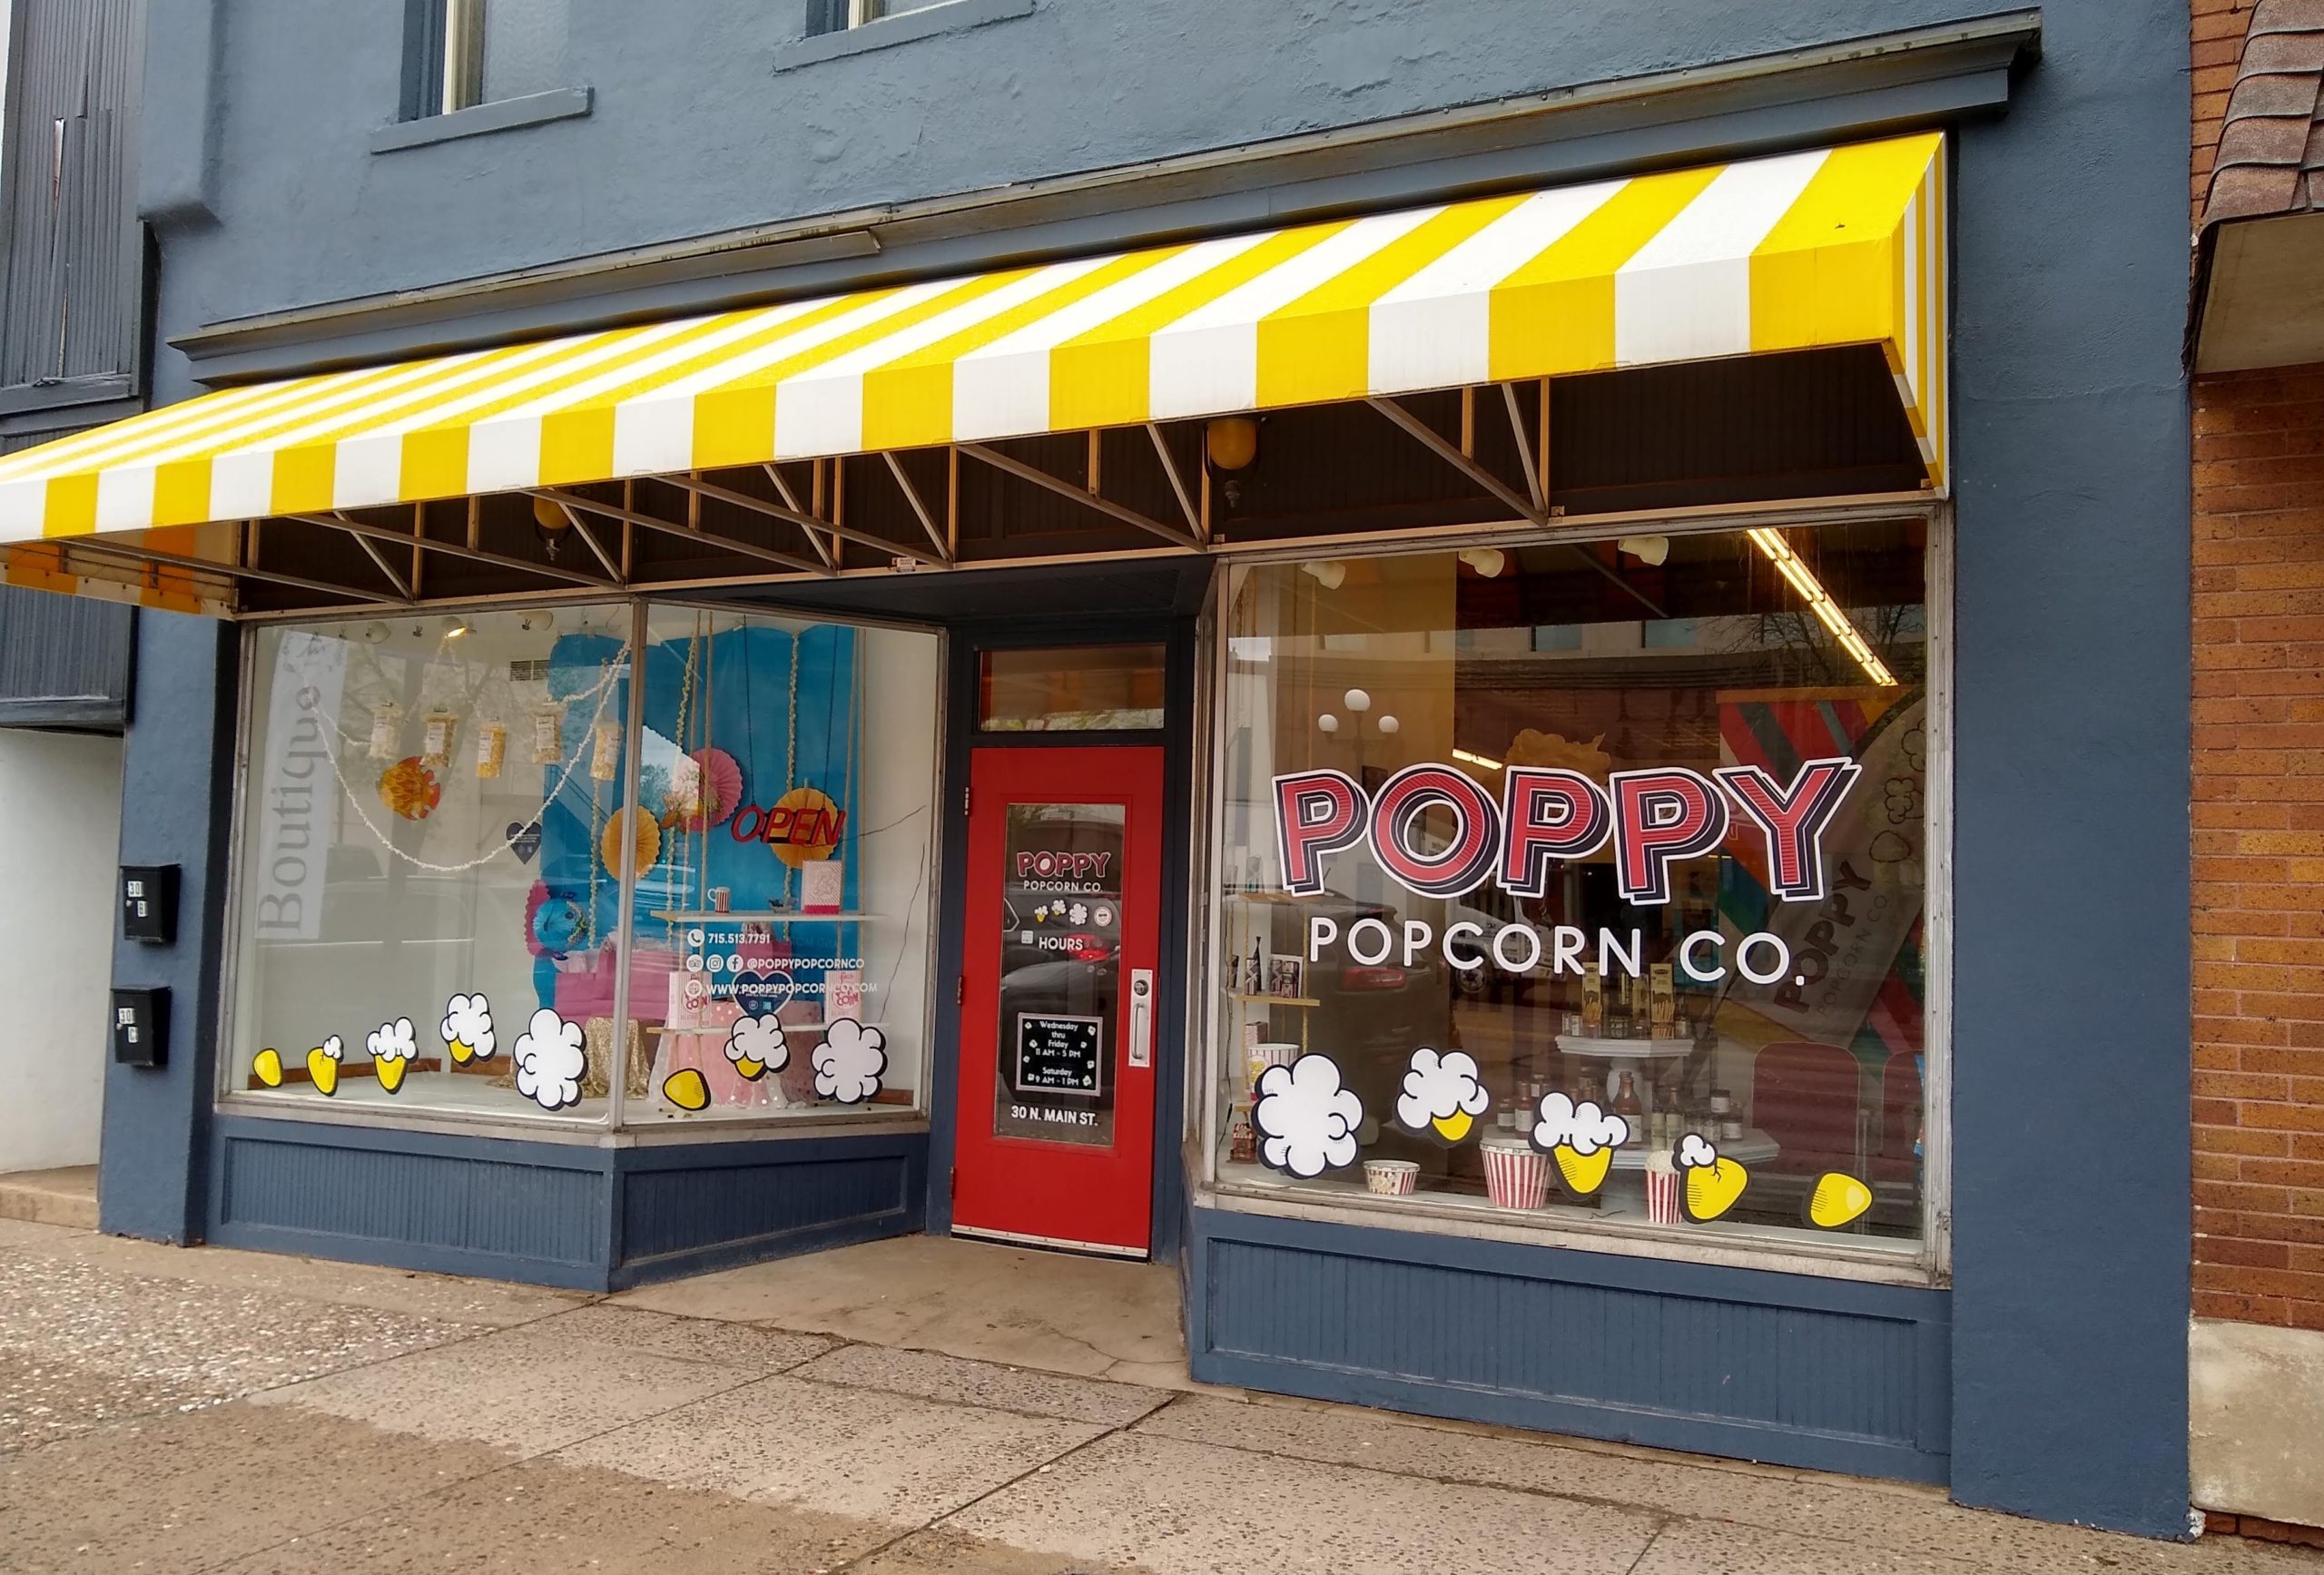 Exterior of Poppy Popcorn Store in Rice Lake